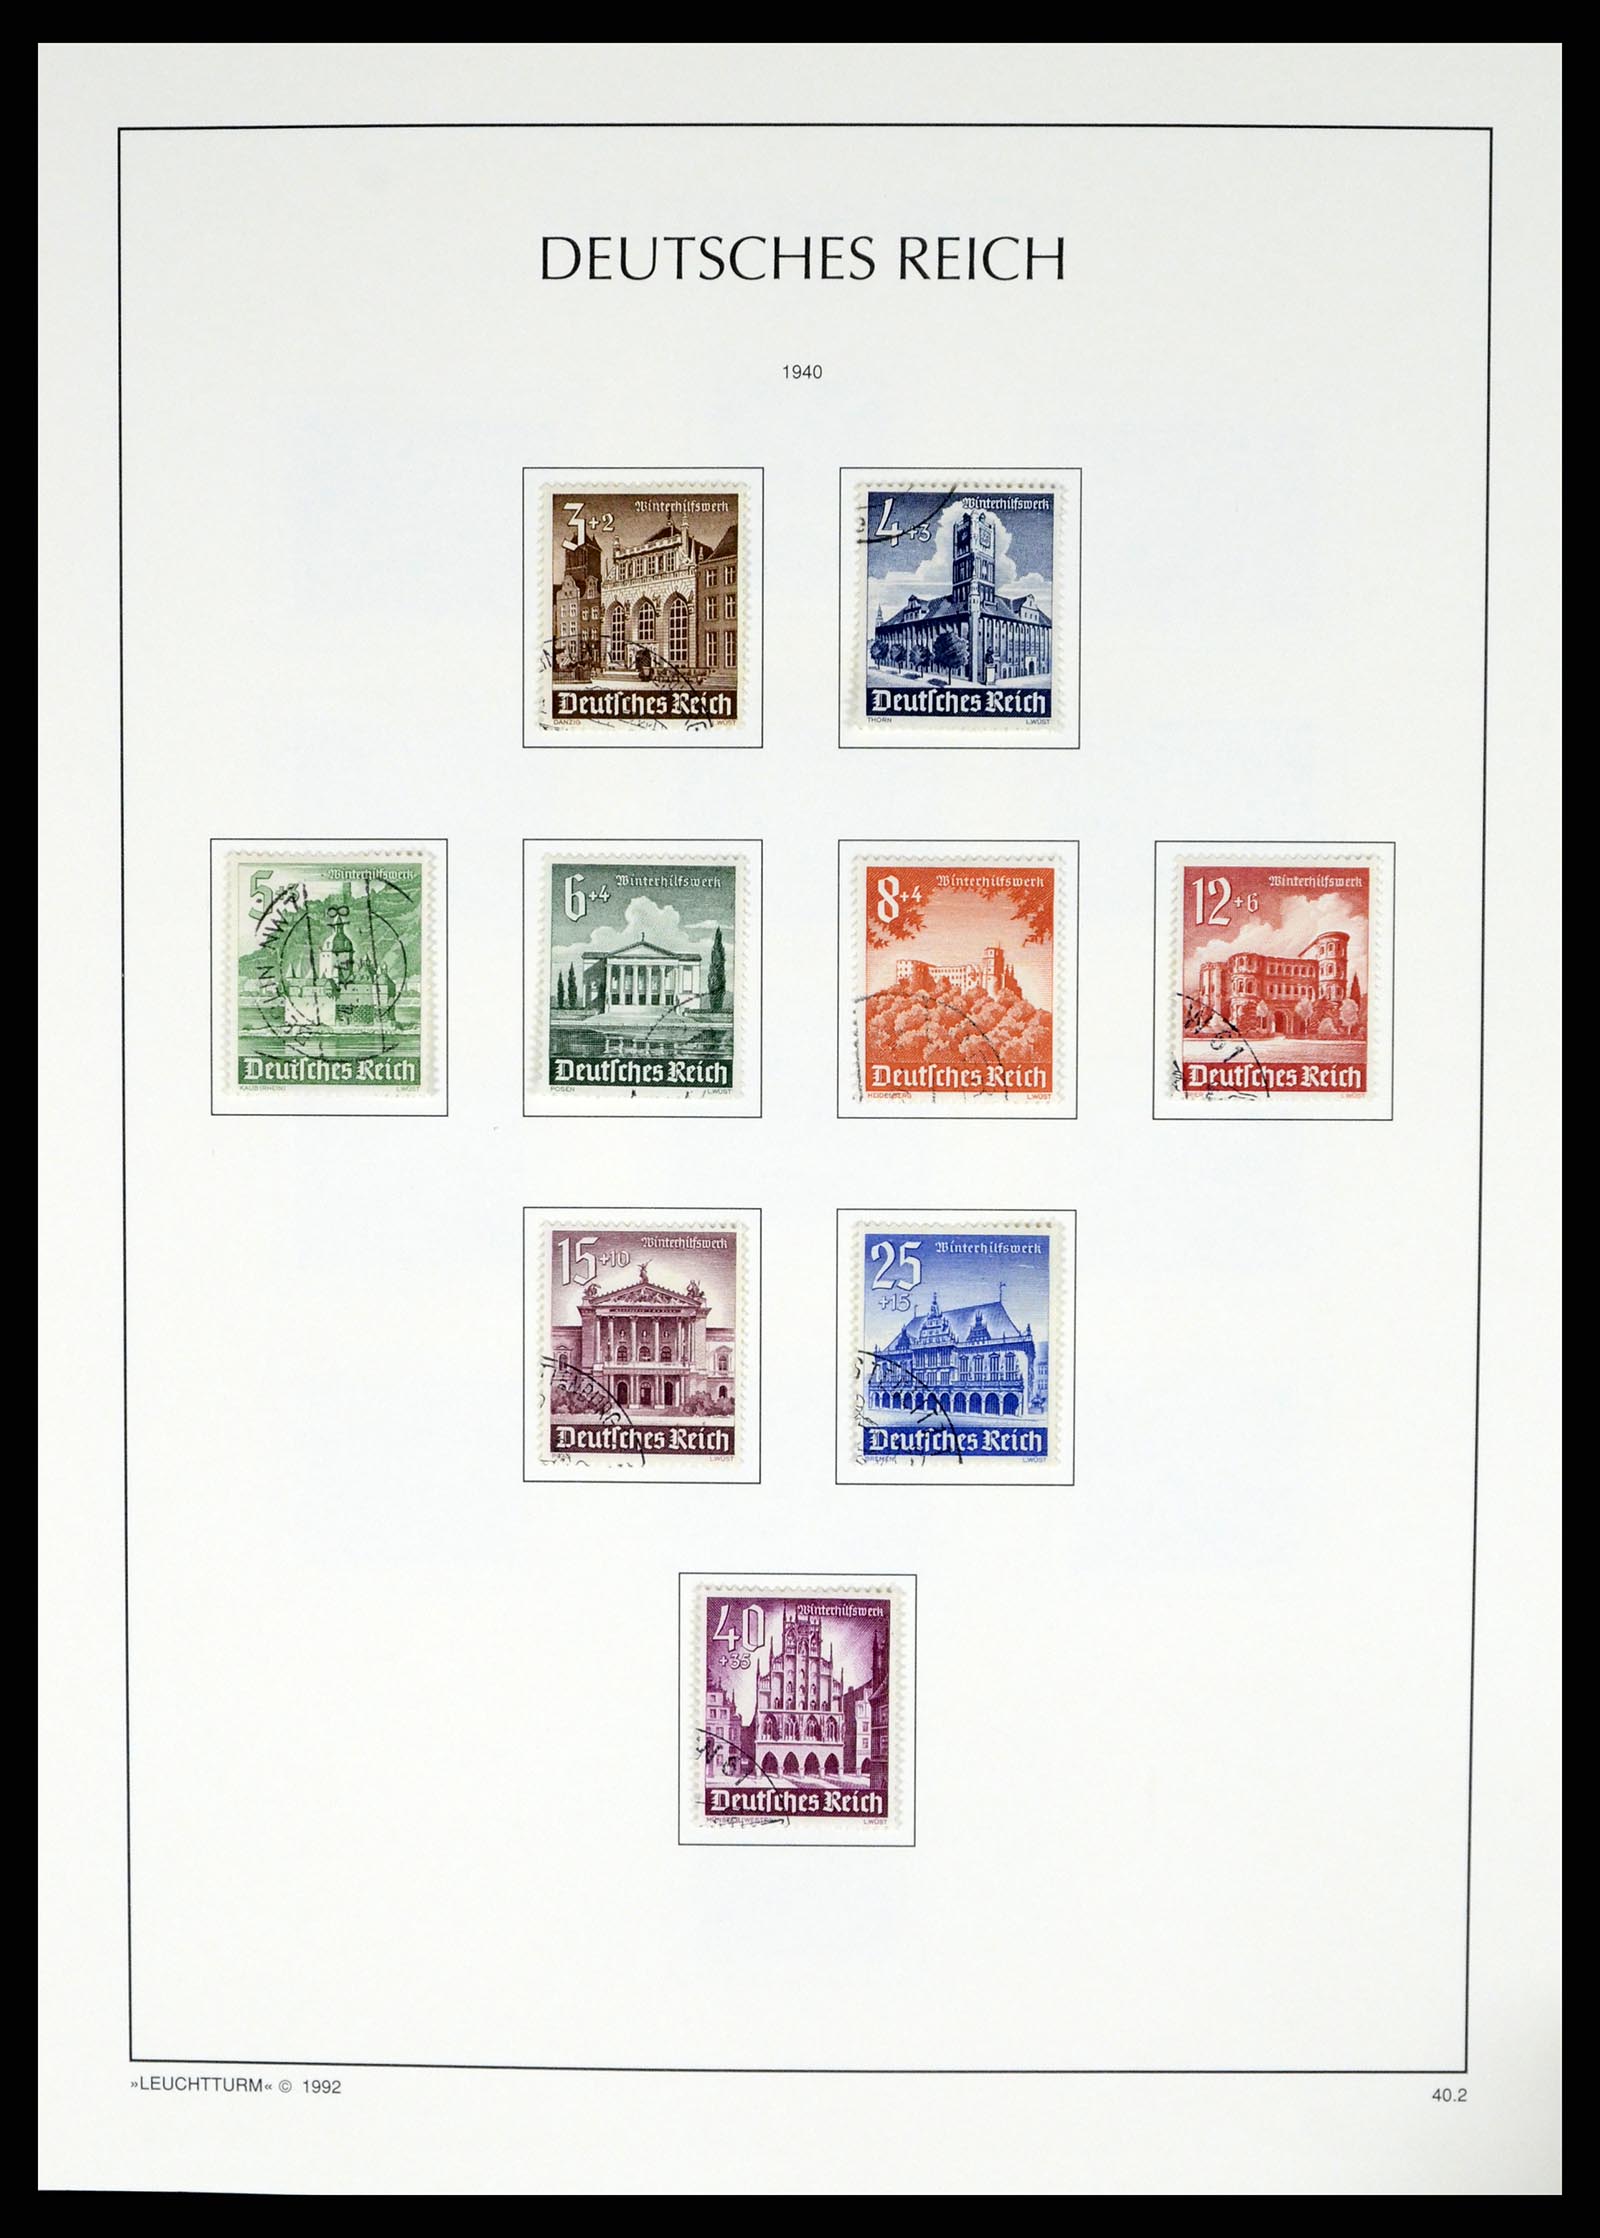 37497 095 - Stamp collection 37497 German Reich 1872-1945.